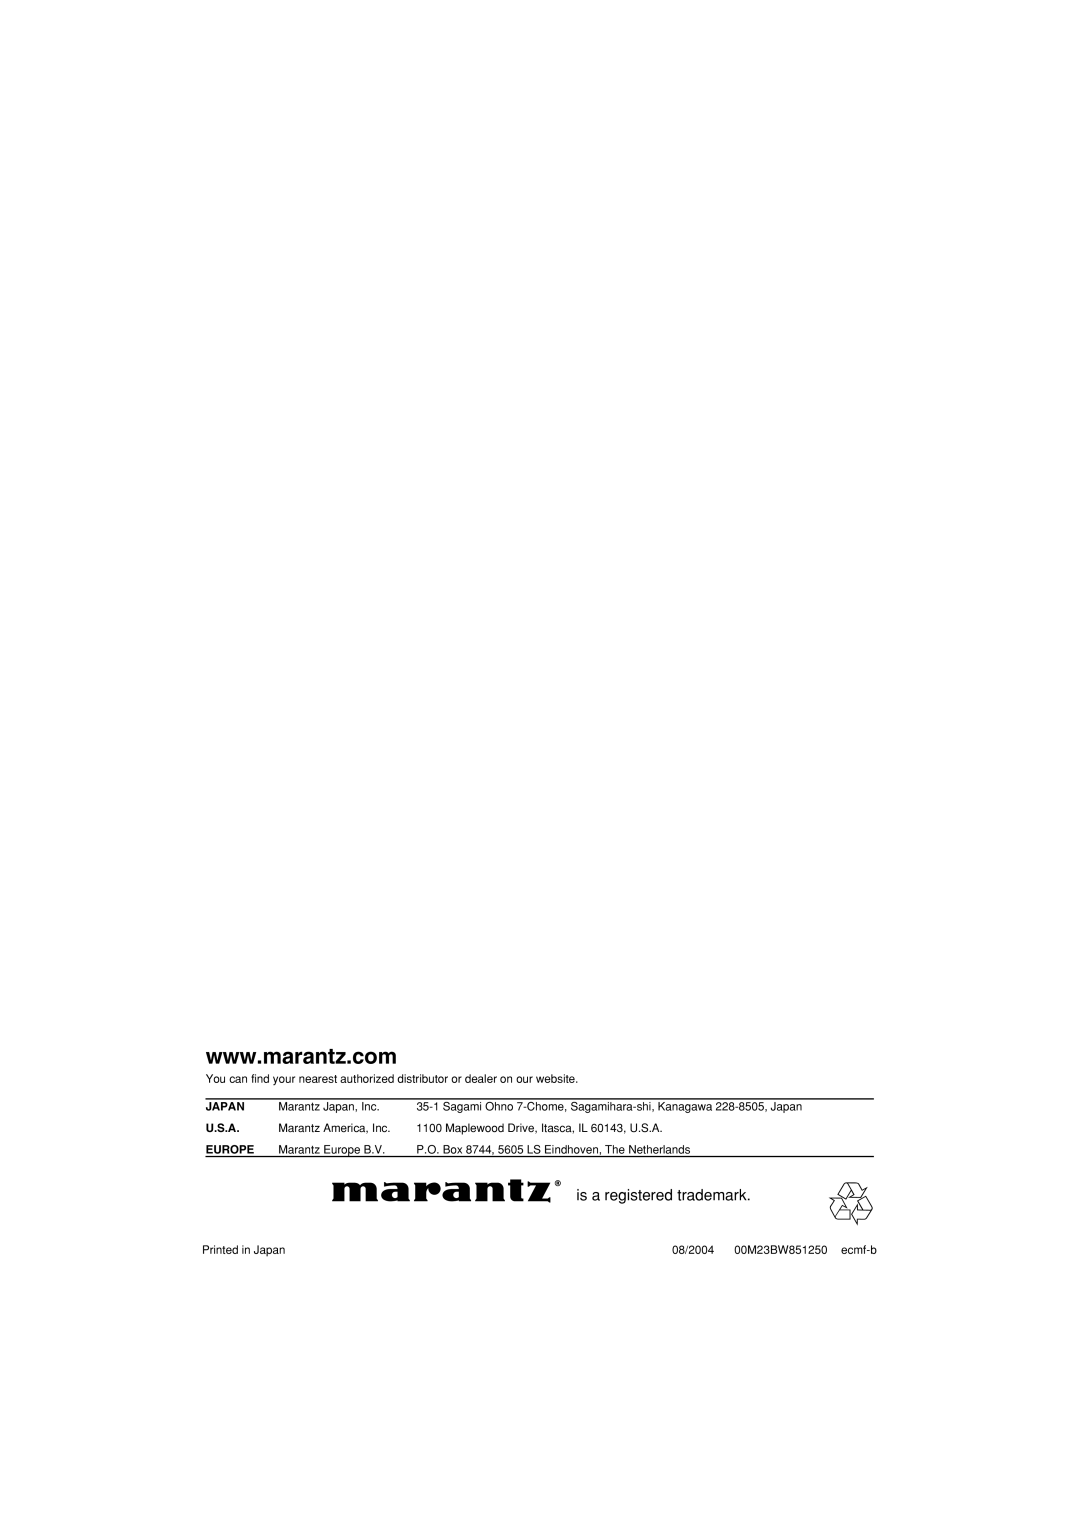 Marantz PD6150D manual is a registered trademark, Japan, U.S.A, Europe 